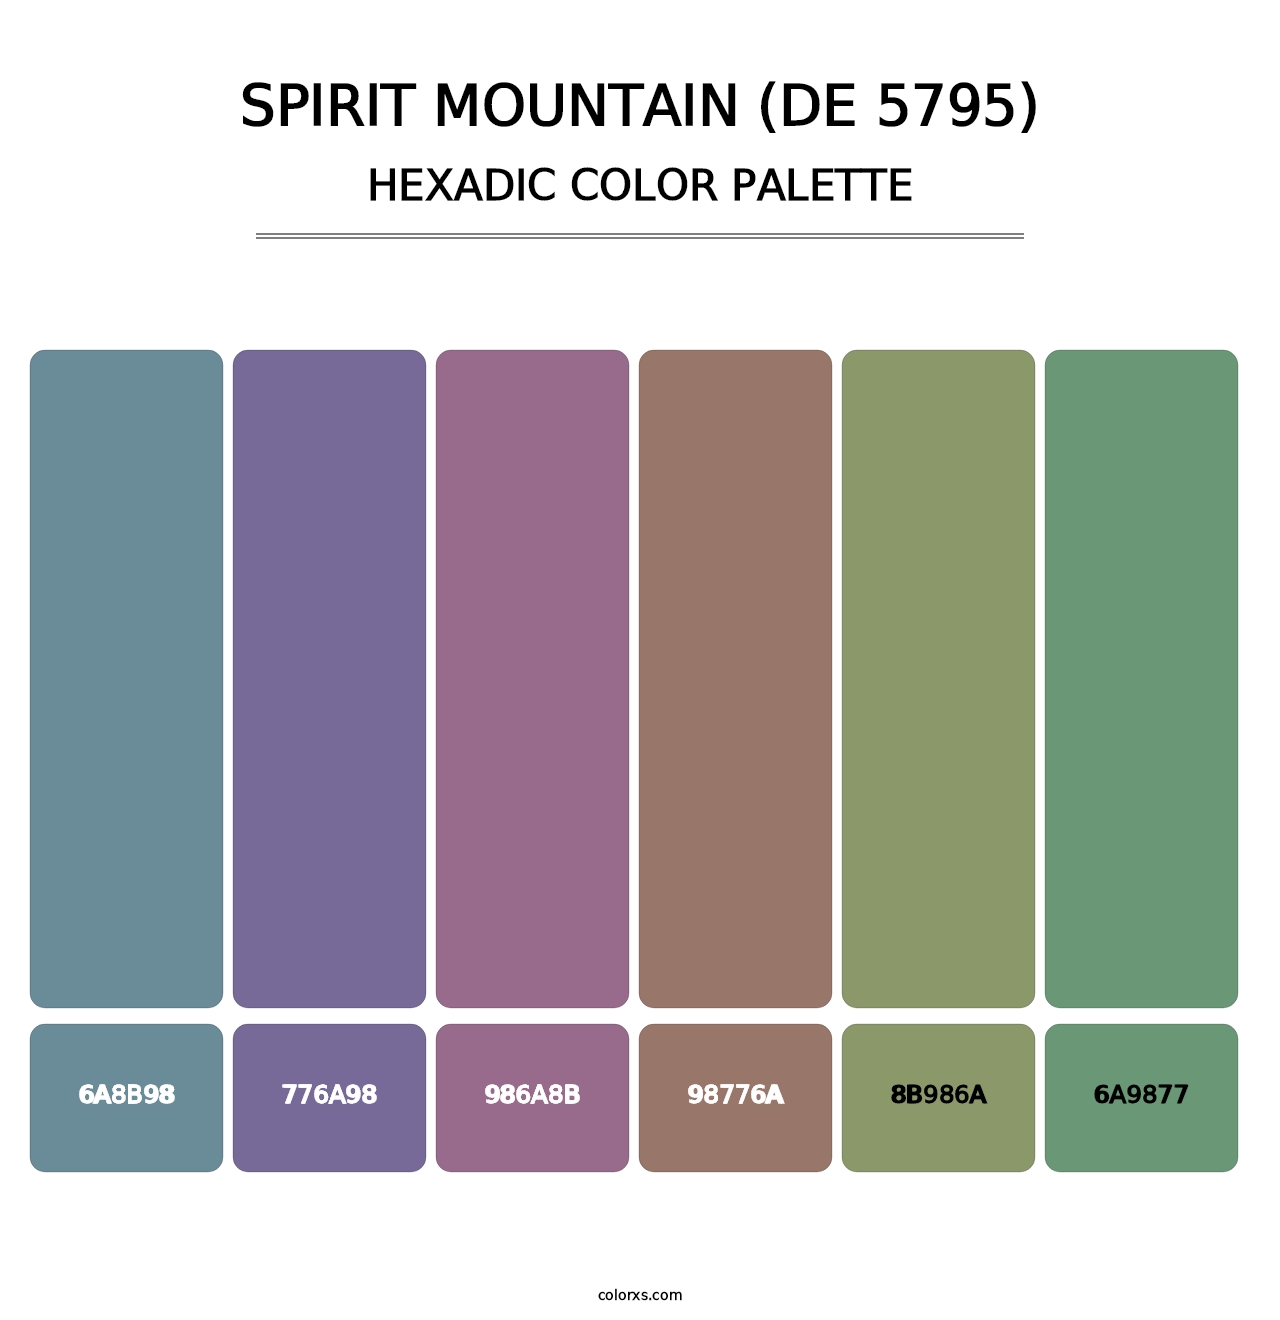 Spirit Mountain (DE 5795) - Hexadic Color Palette